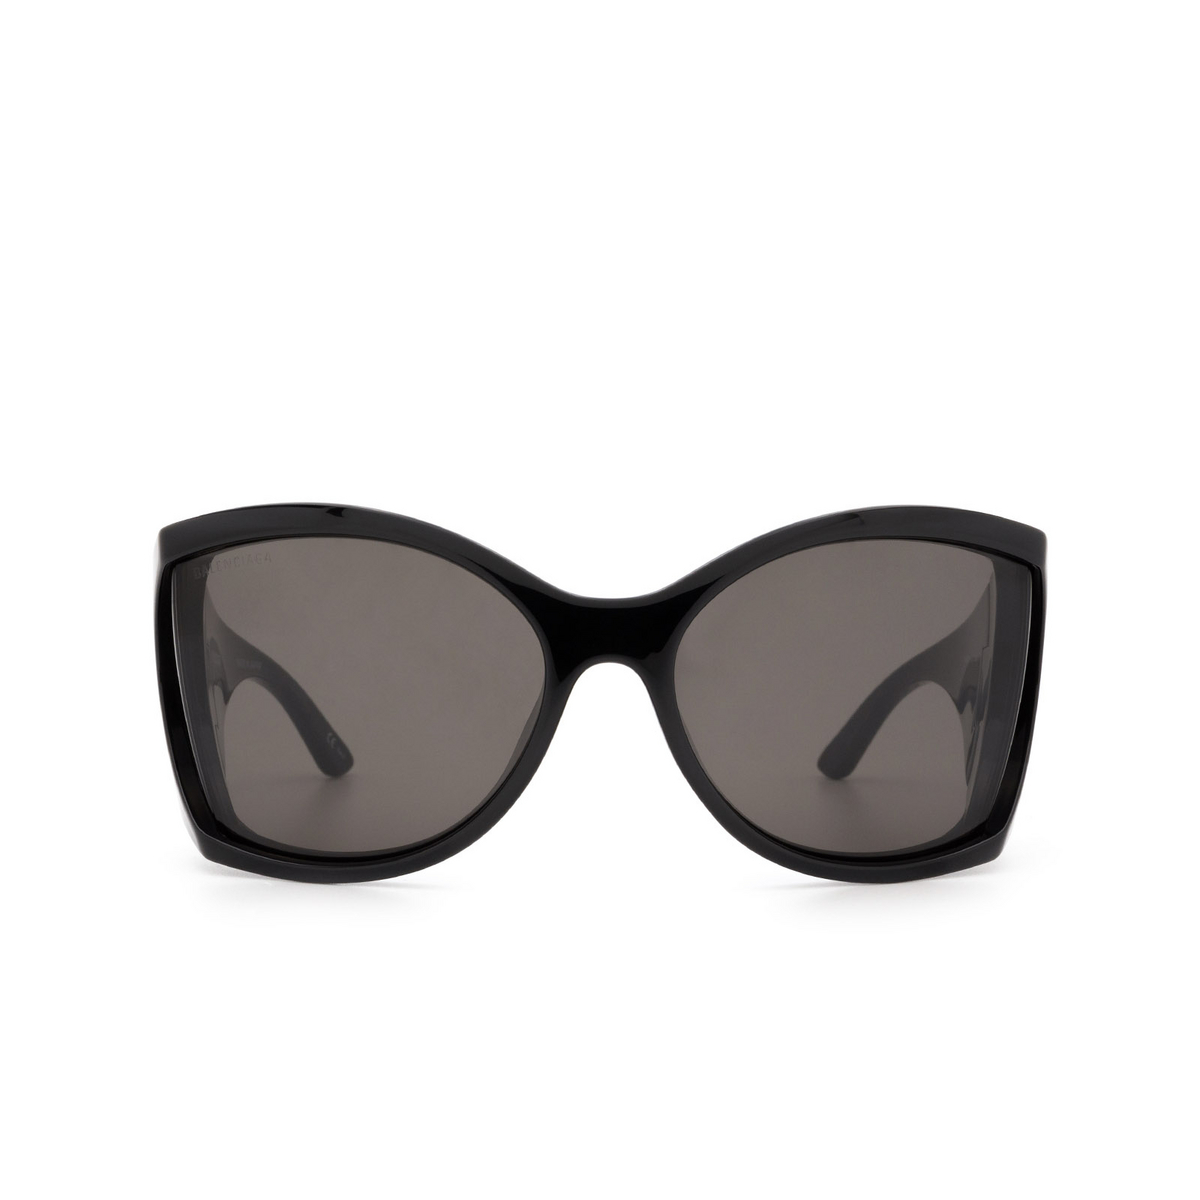 Balenciaga® Irregular Sunglasses: BB0154S color Black 001 - front view.